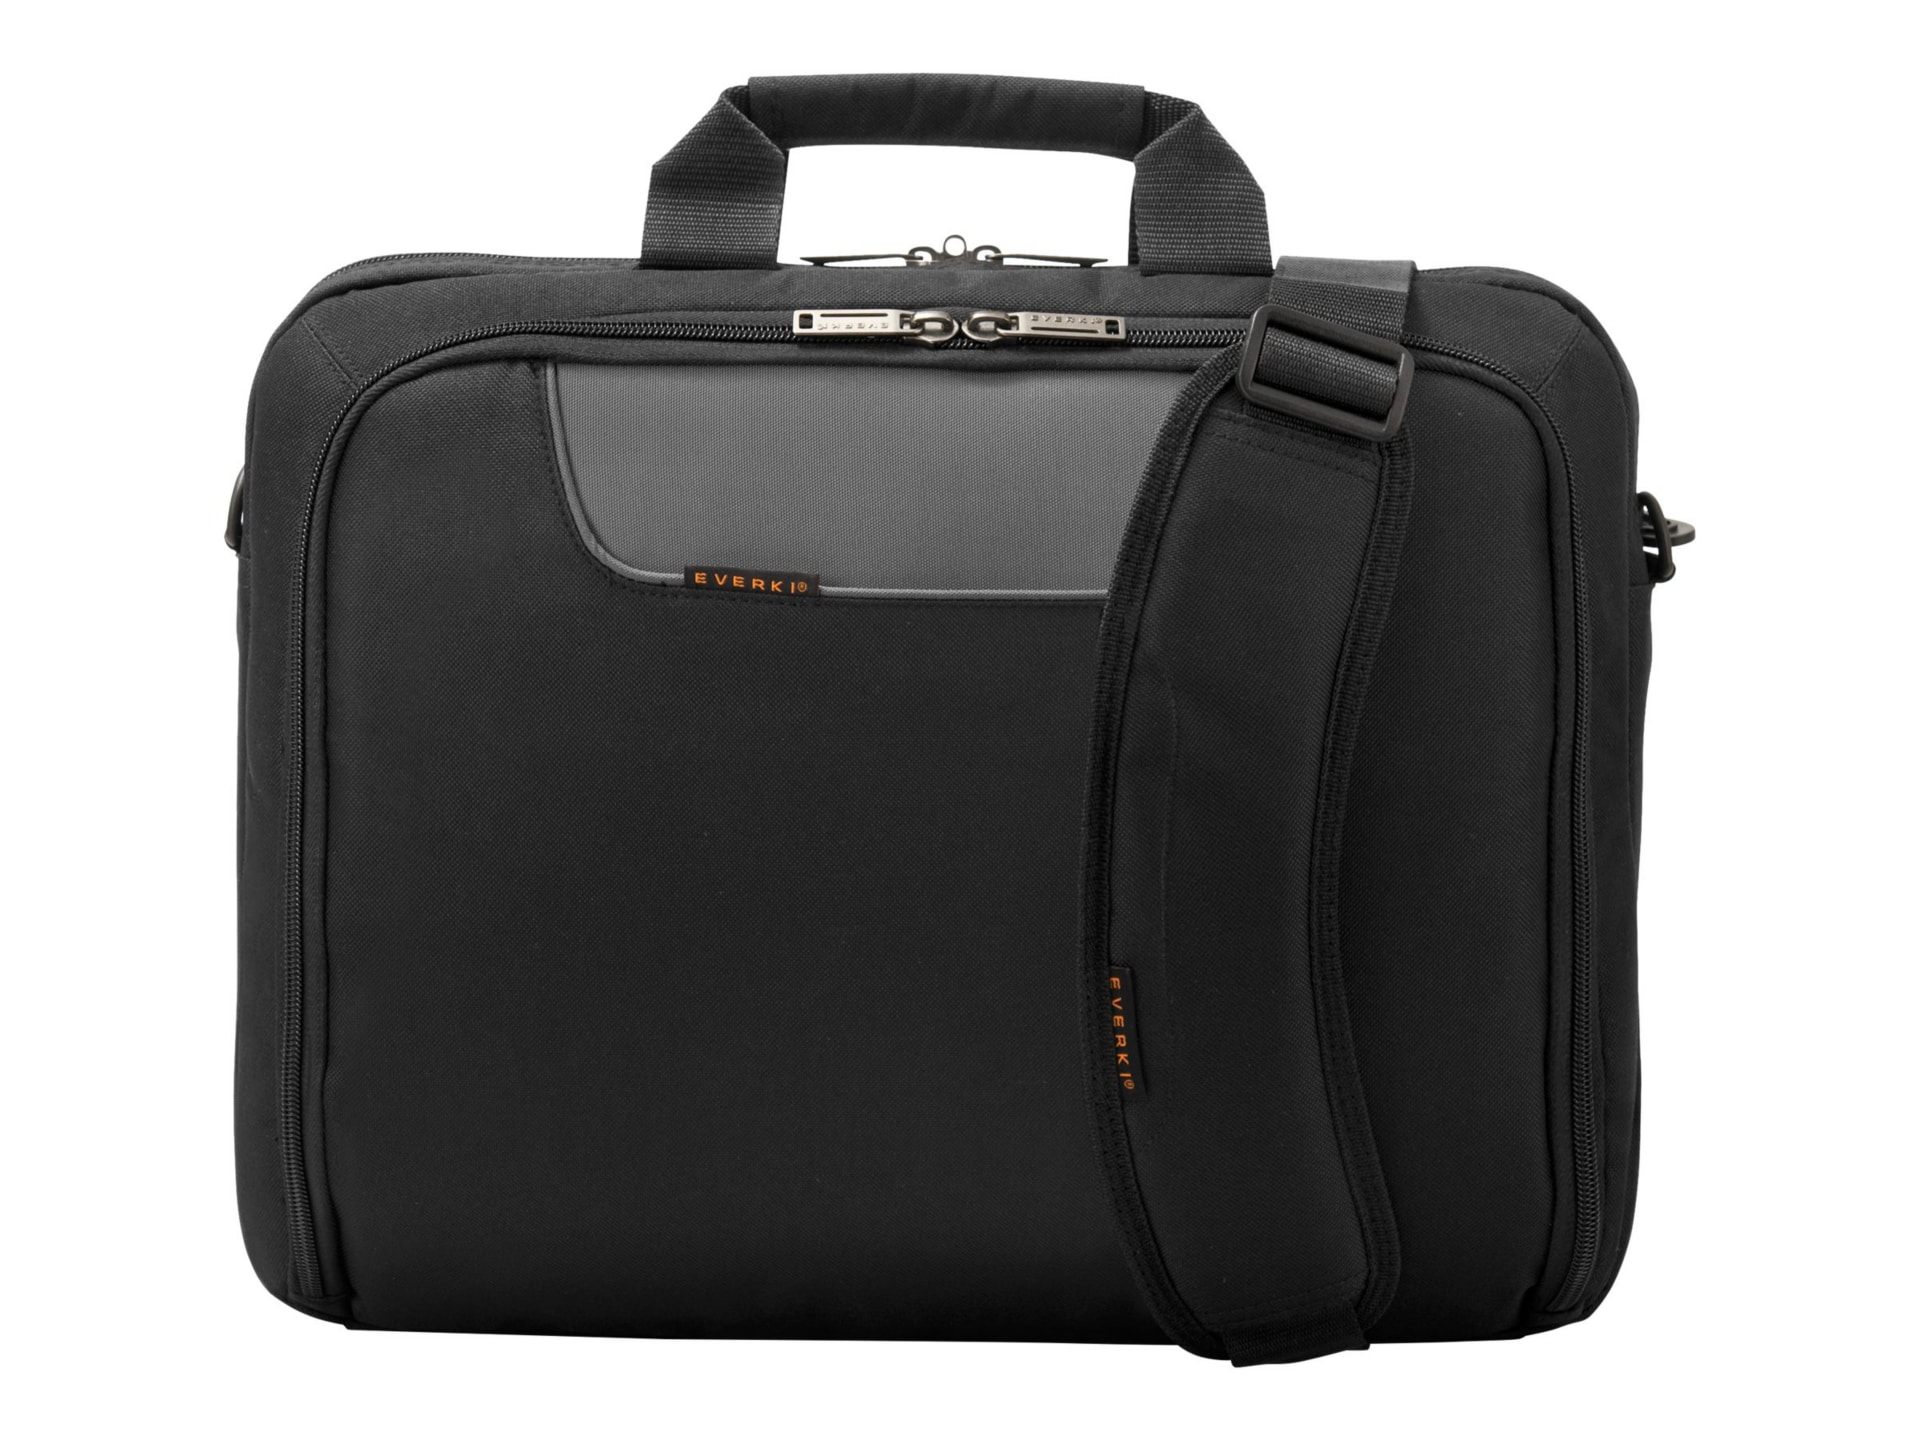 Everki Advance Compact Laptop Briefcase - notebook carrying case